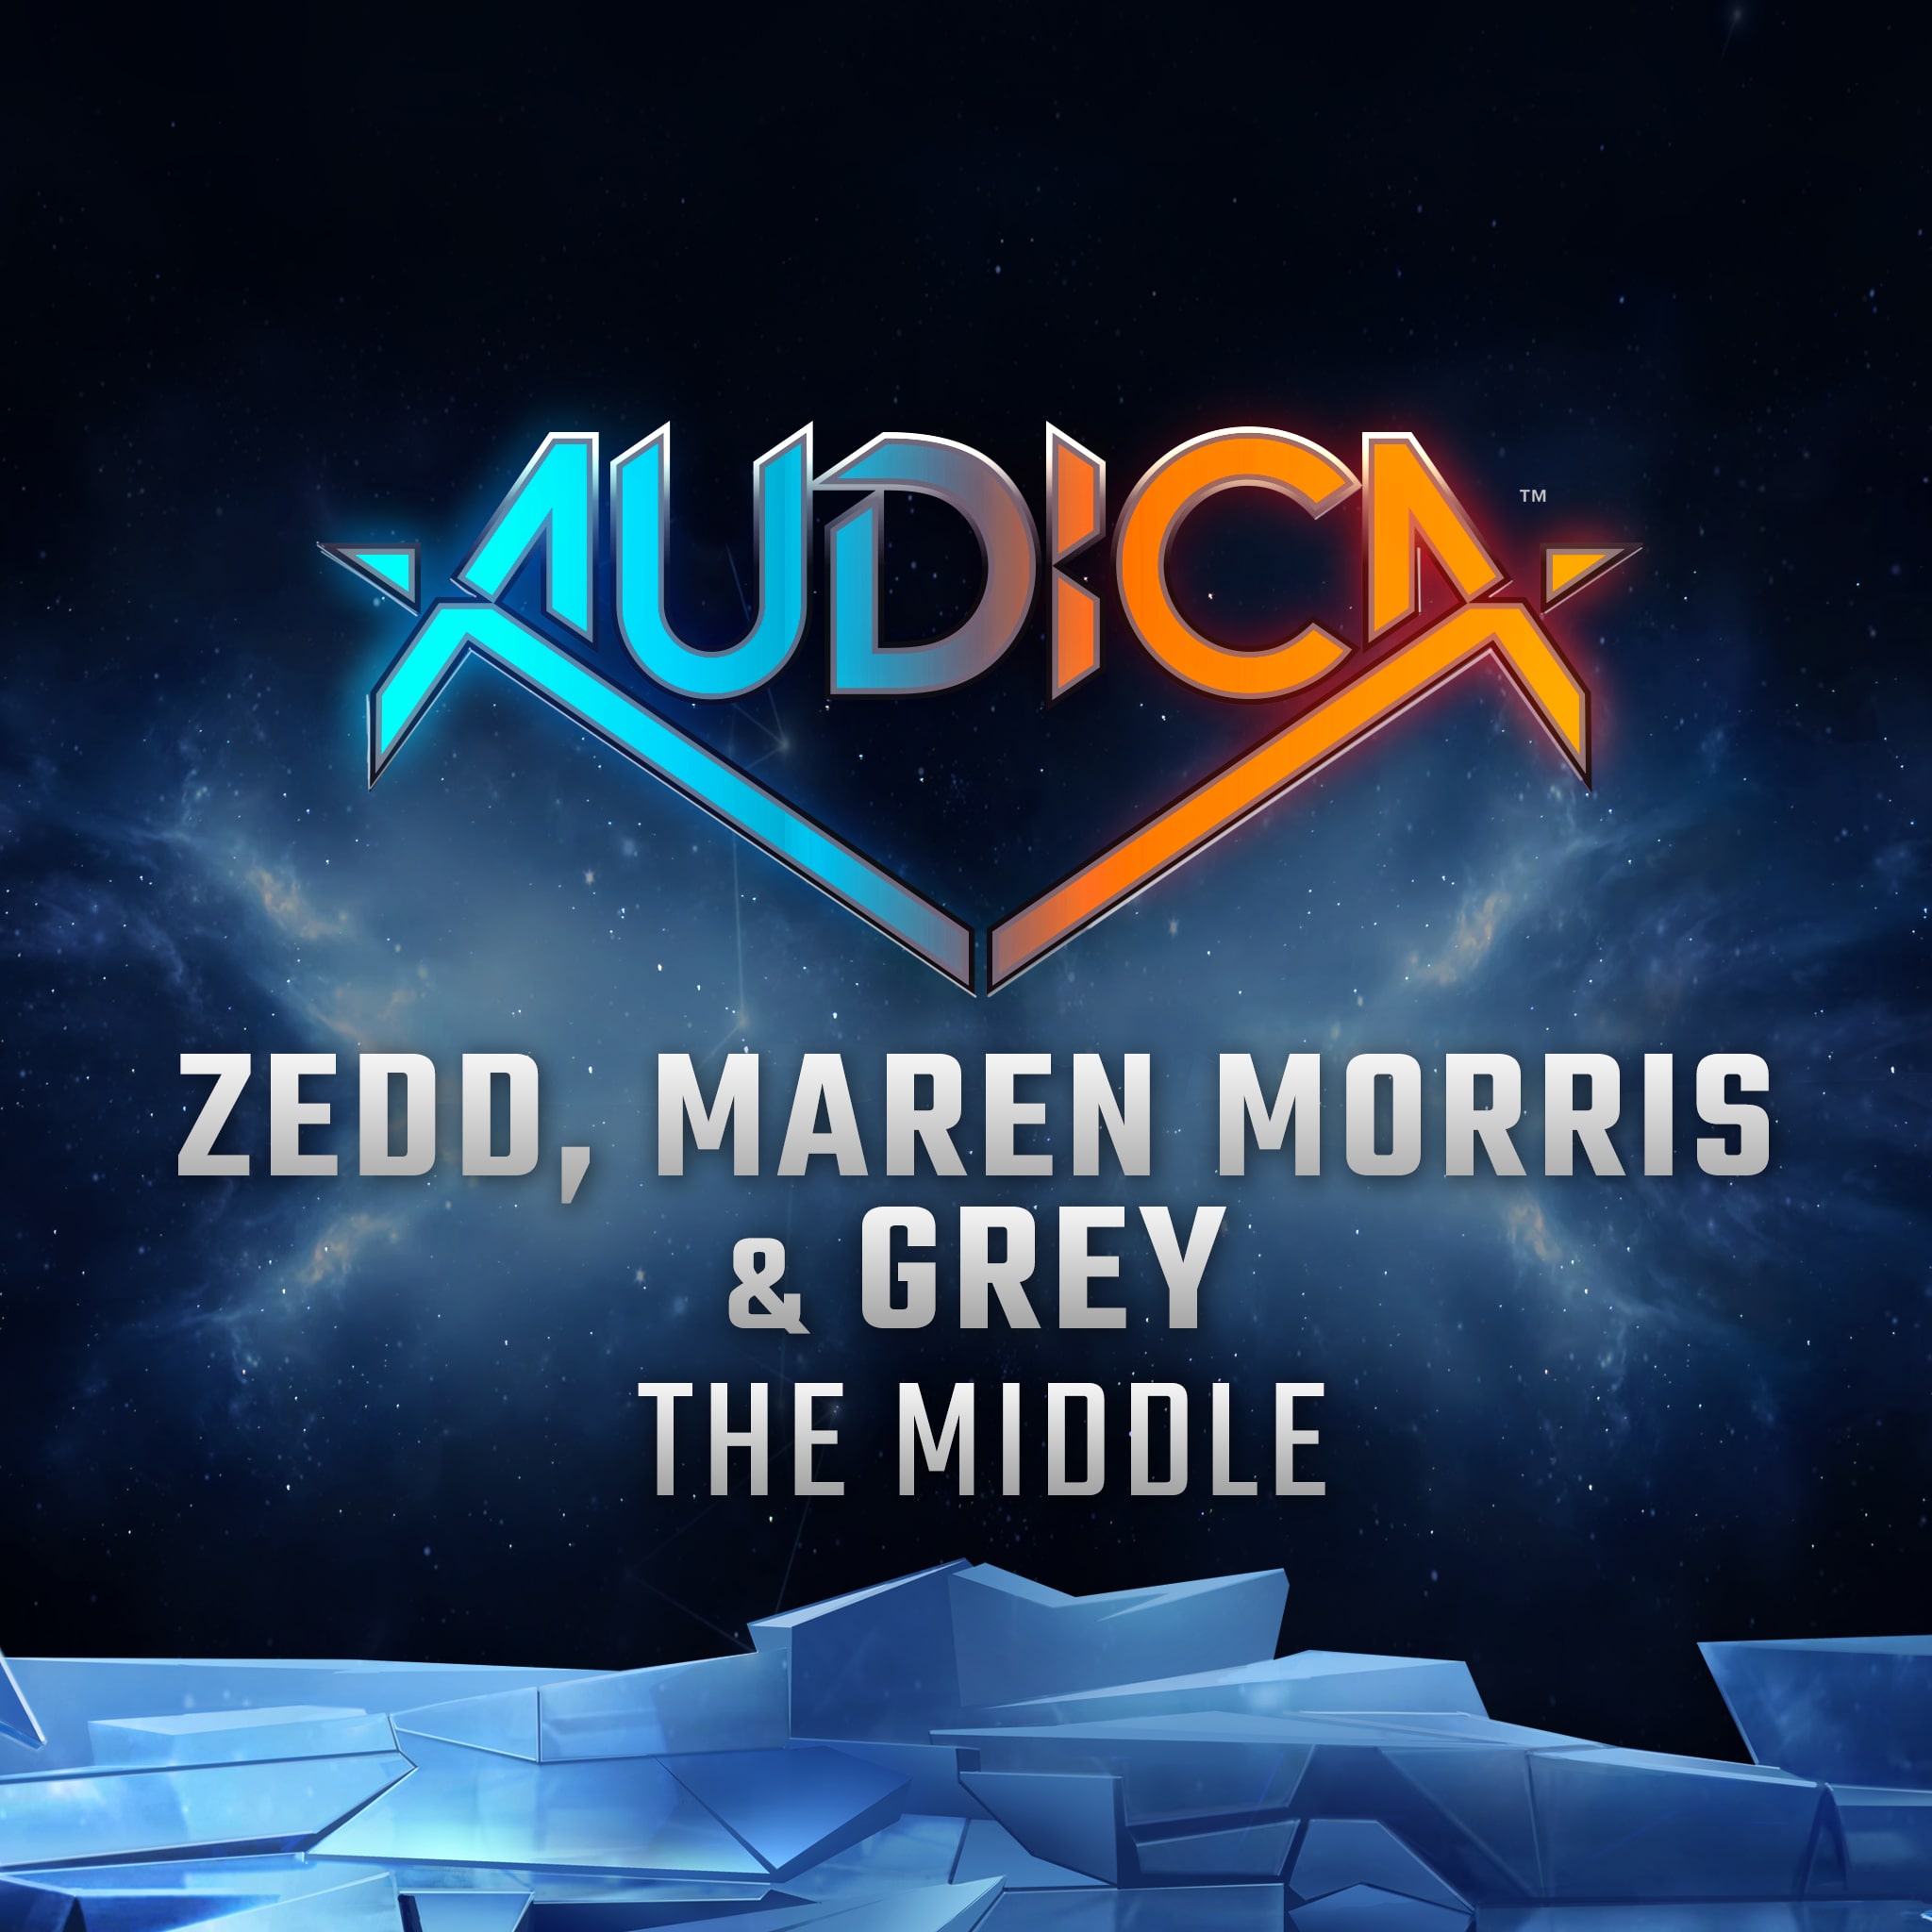 'The Middle' -Zedd, Maren Morris & Grey